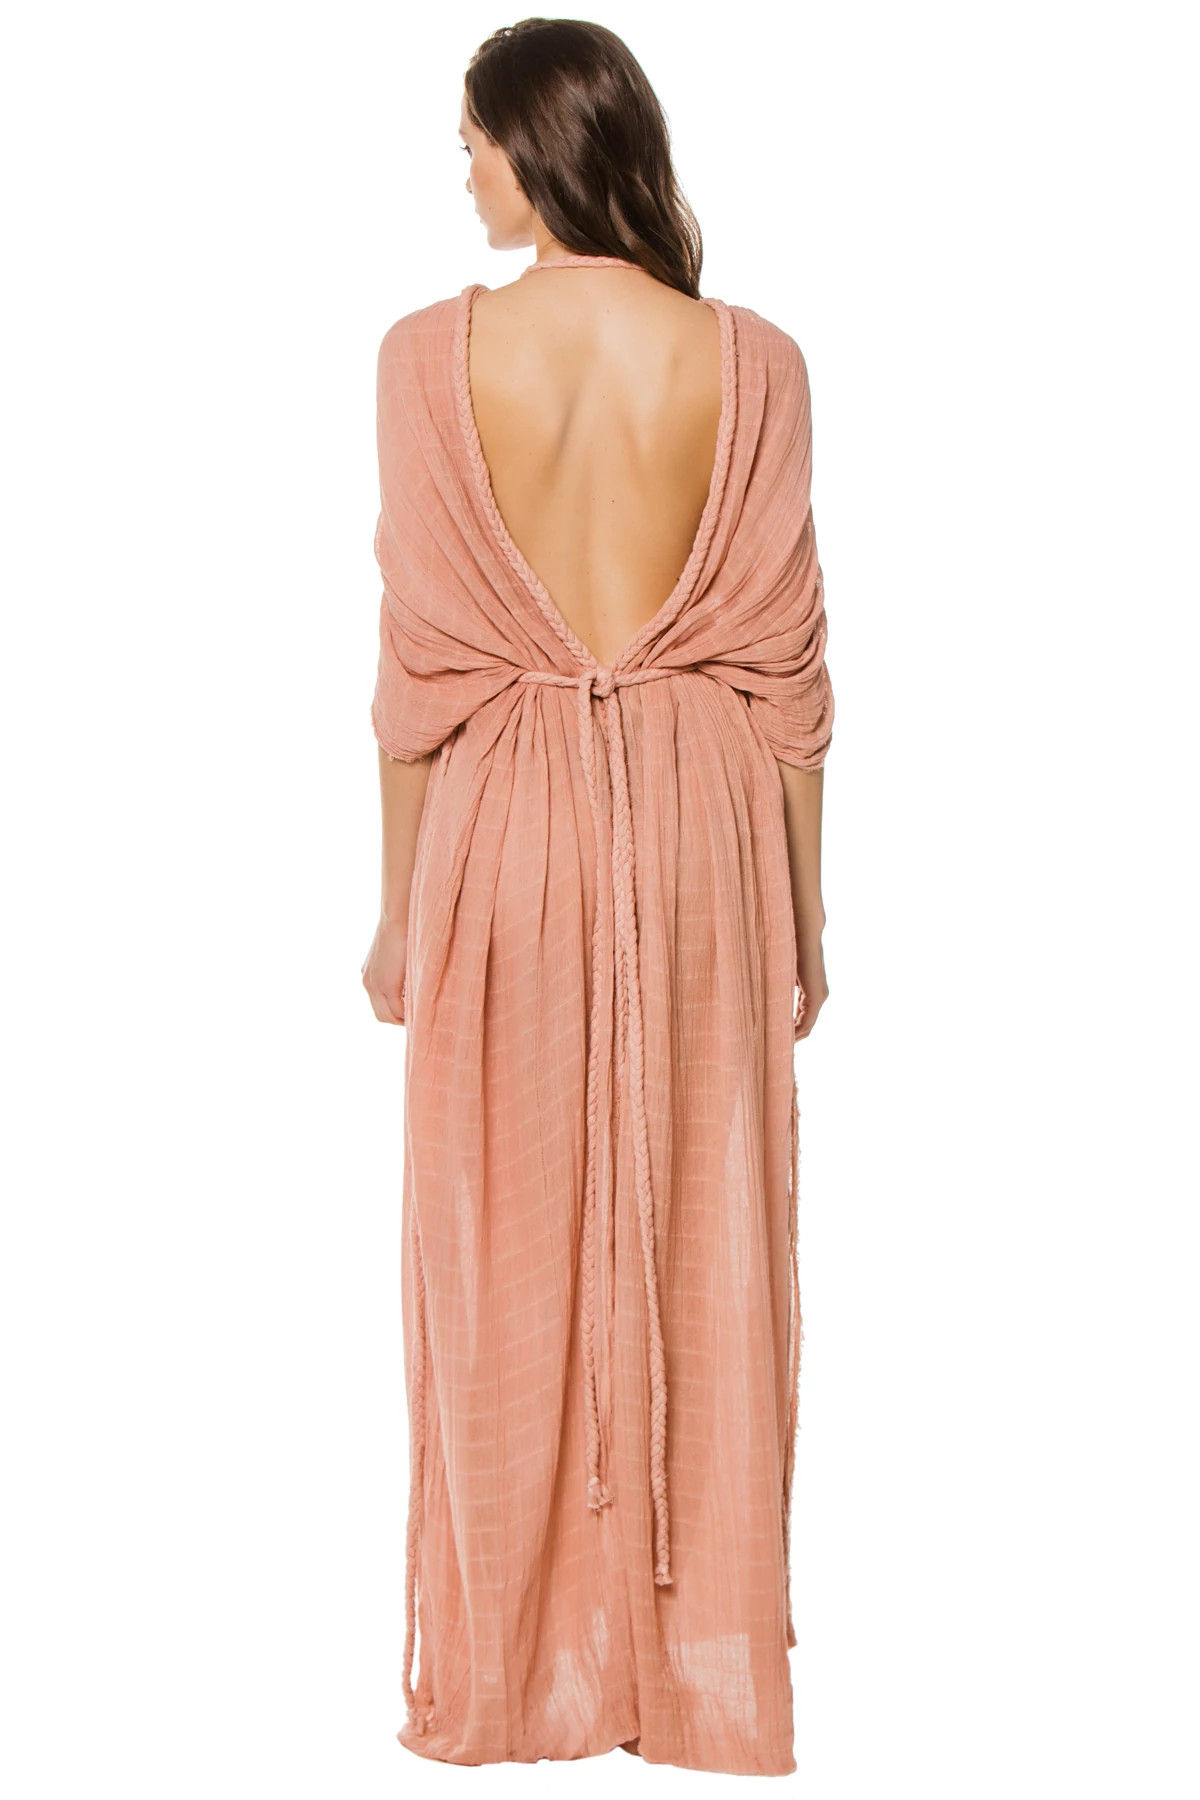 ROSE Athena Full Length Goddess Gown image number 2